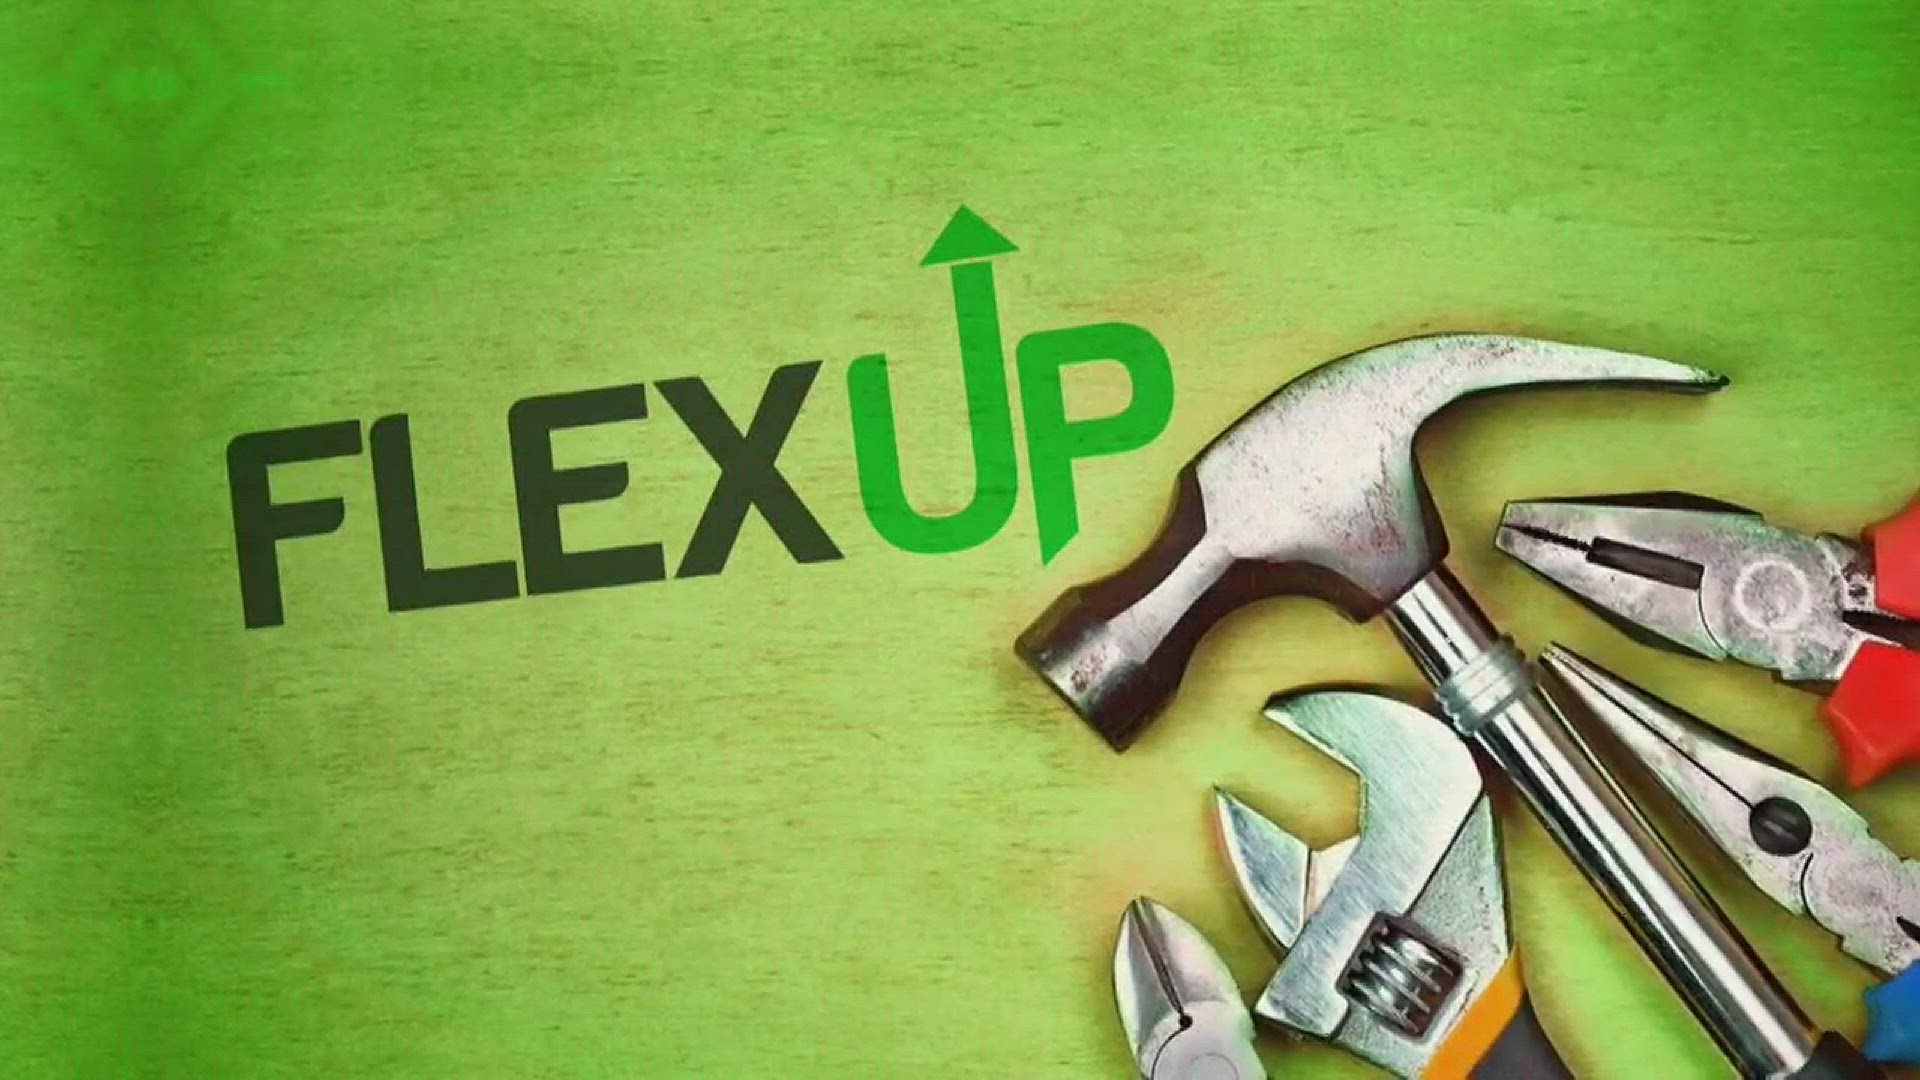 The Exchange: Flex Up